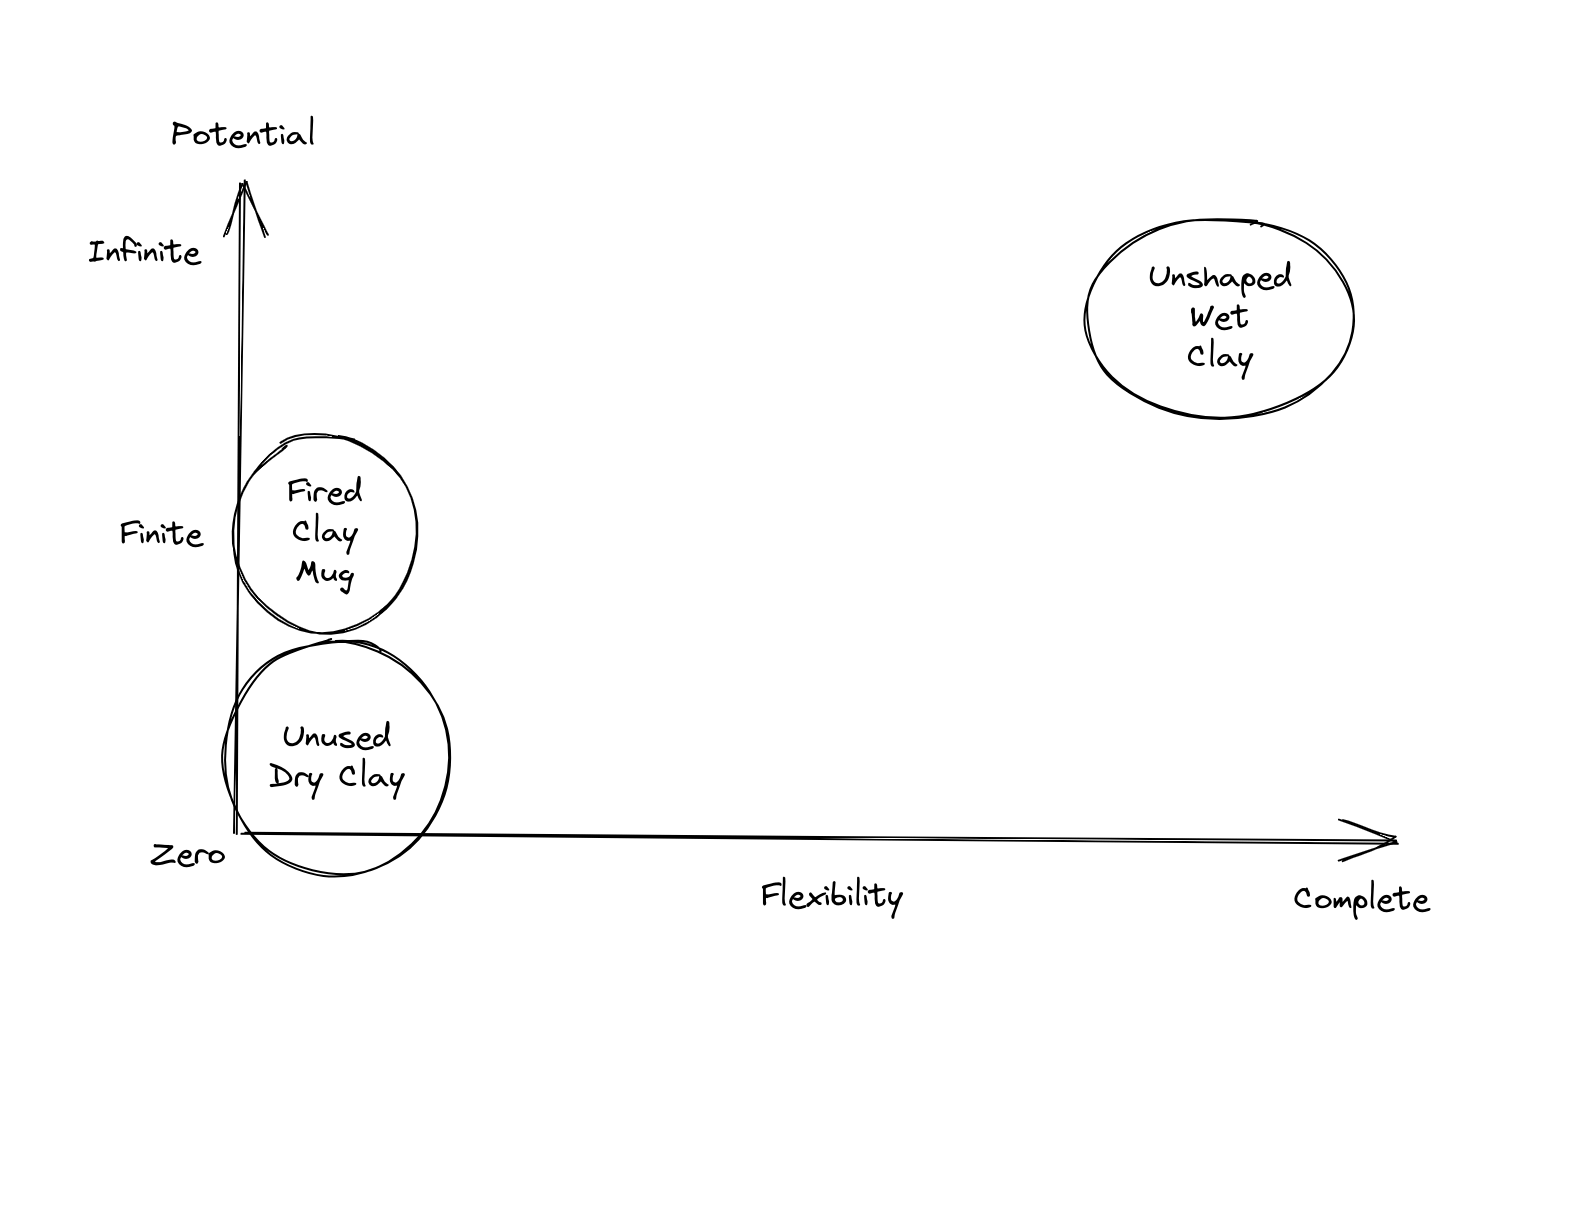 Flexible vs. Potential